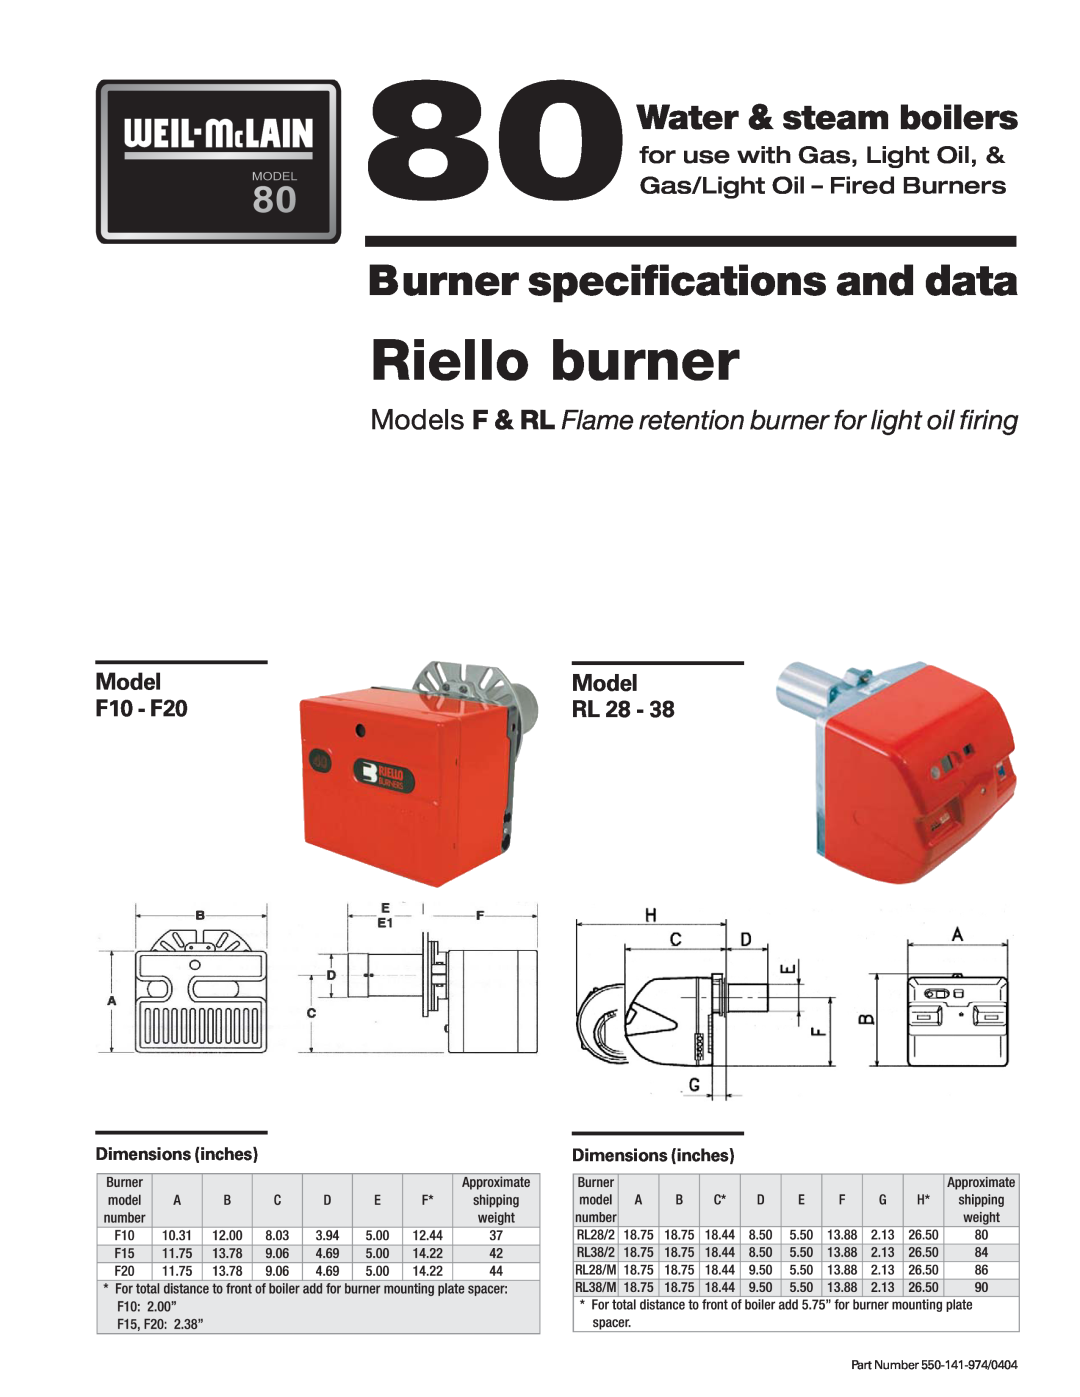 Weil-McLain F10 - F20 specifications Riello burner, Burner specifications and data, 80Water & steam boilers, Model RL 